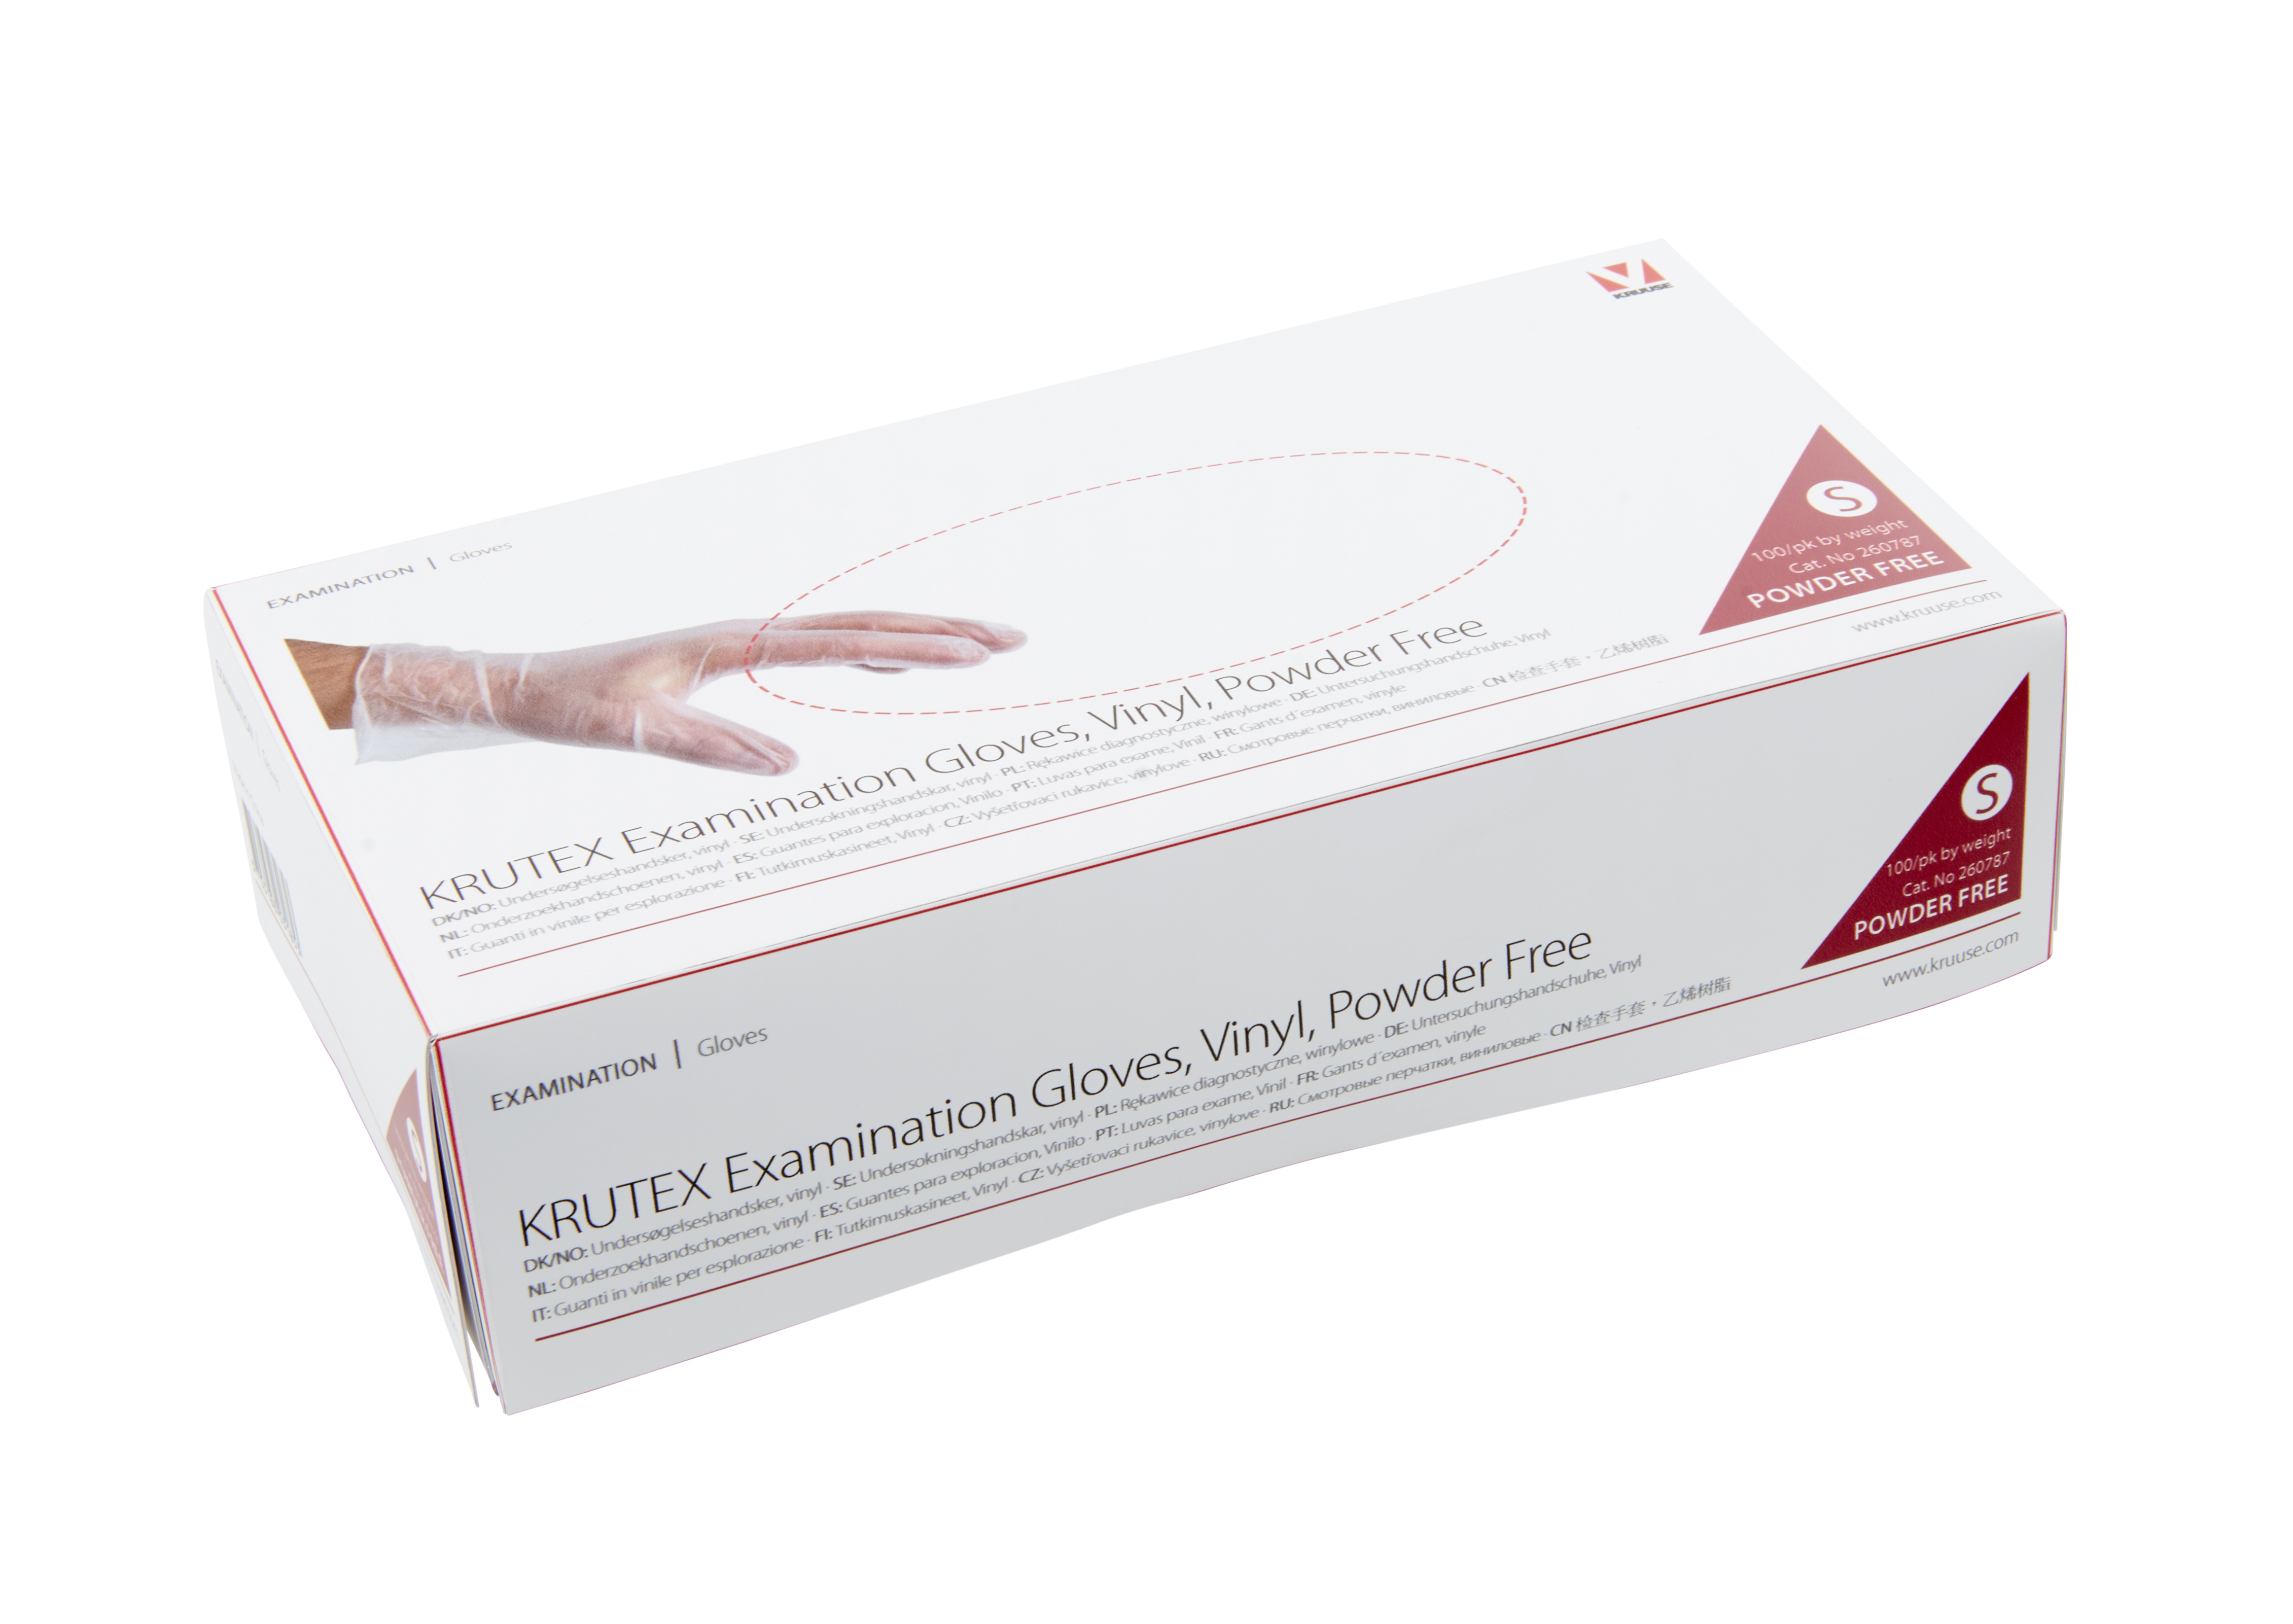 KRUTEX Examination Gloves, vinyl, powder-free, L, 100/pk